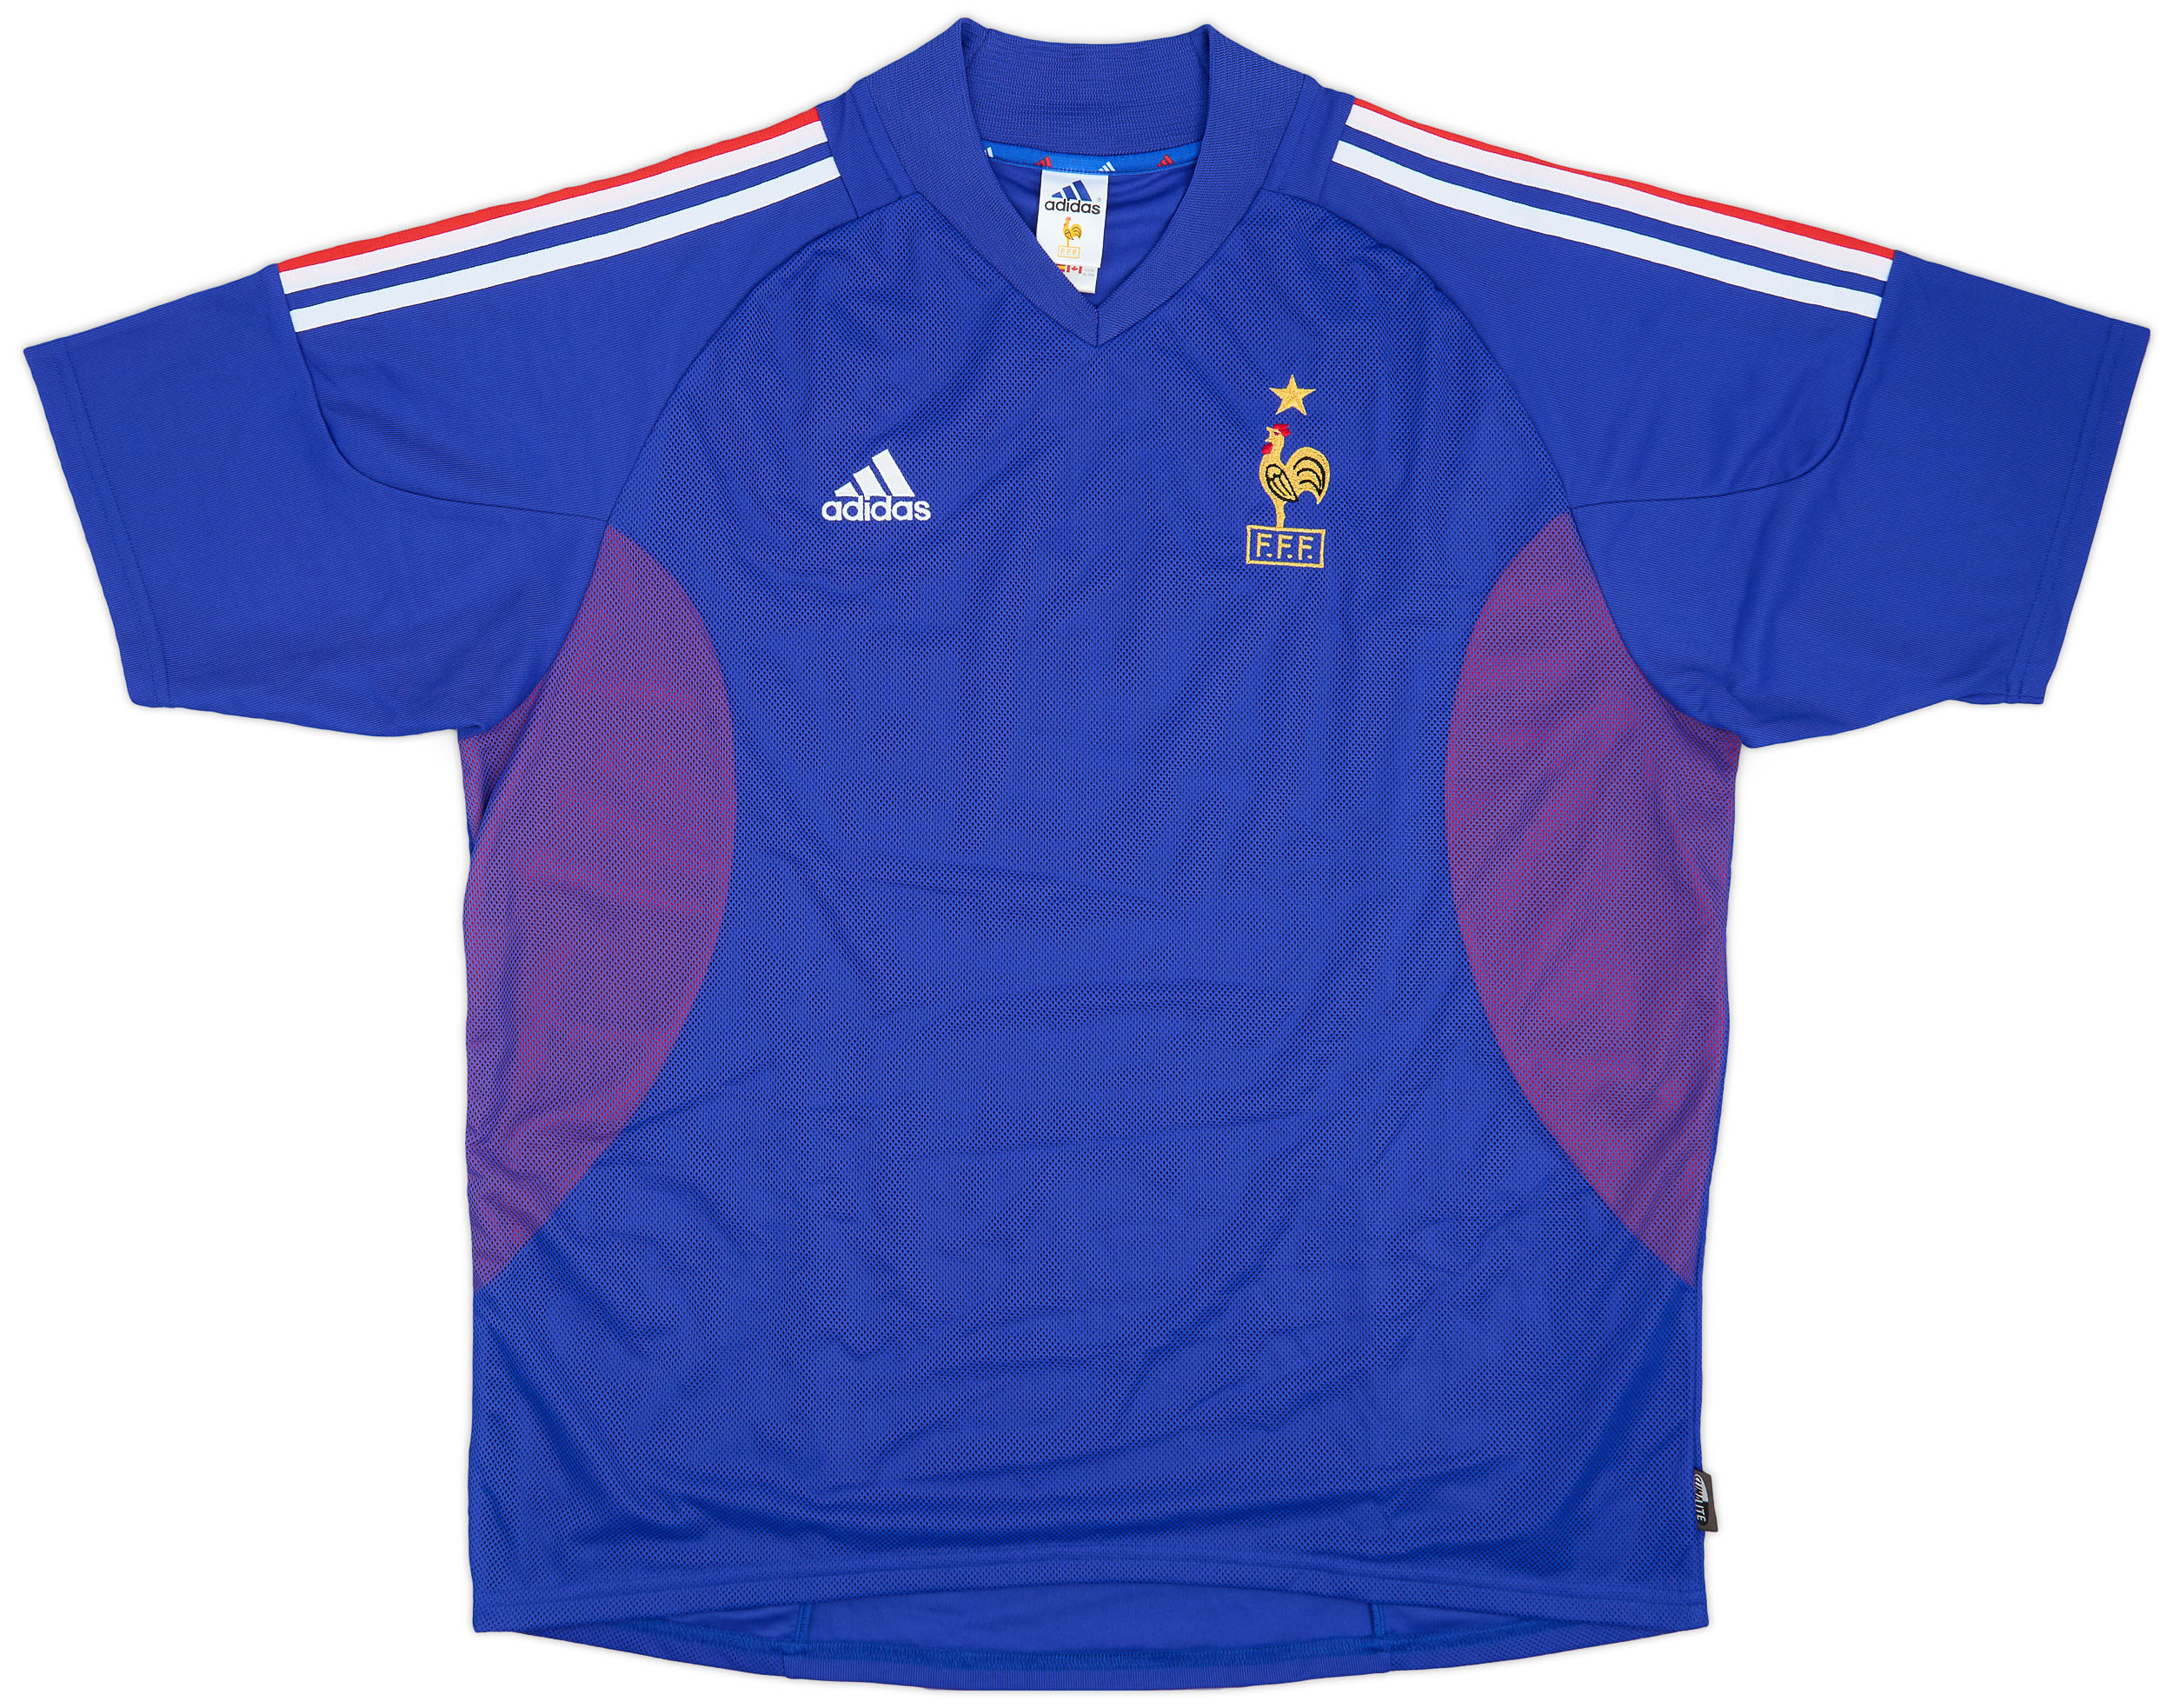 2002-04 France 'Signed' Home Shirt - 10/10 - ()